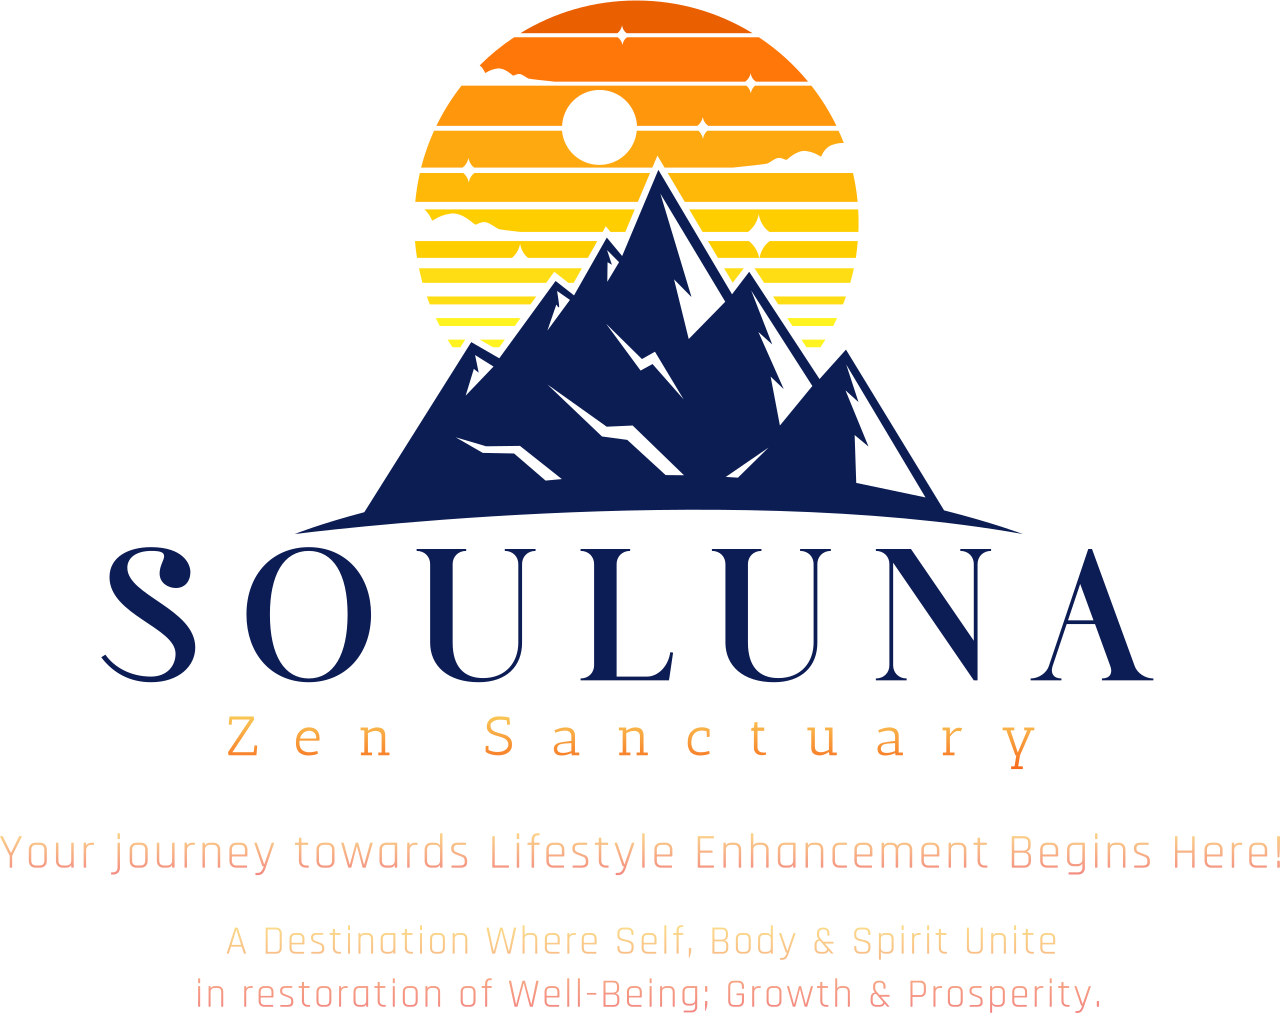 SOULUNA's logo